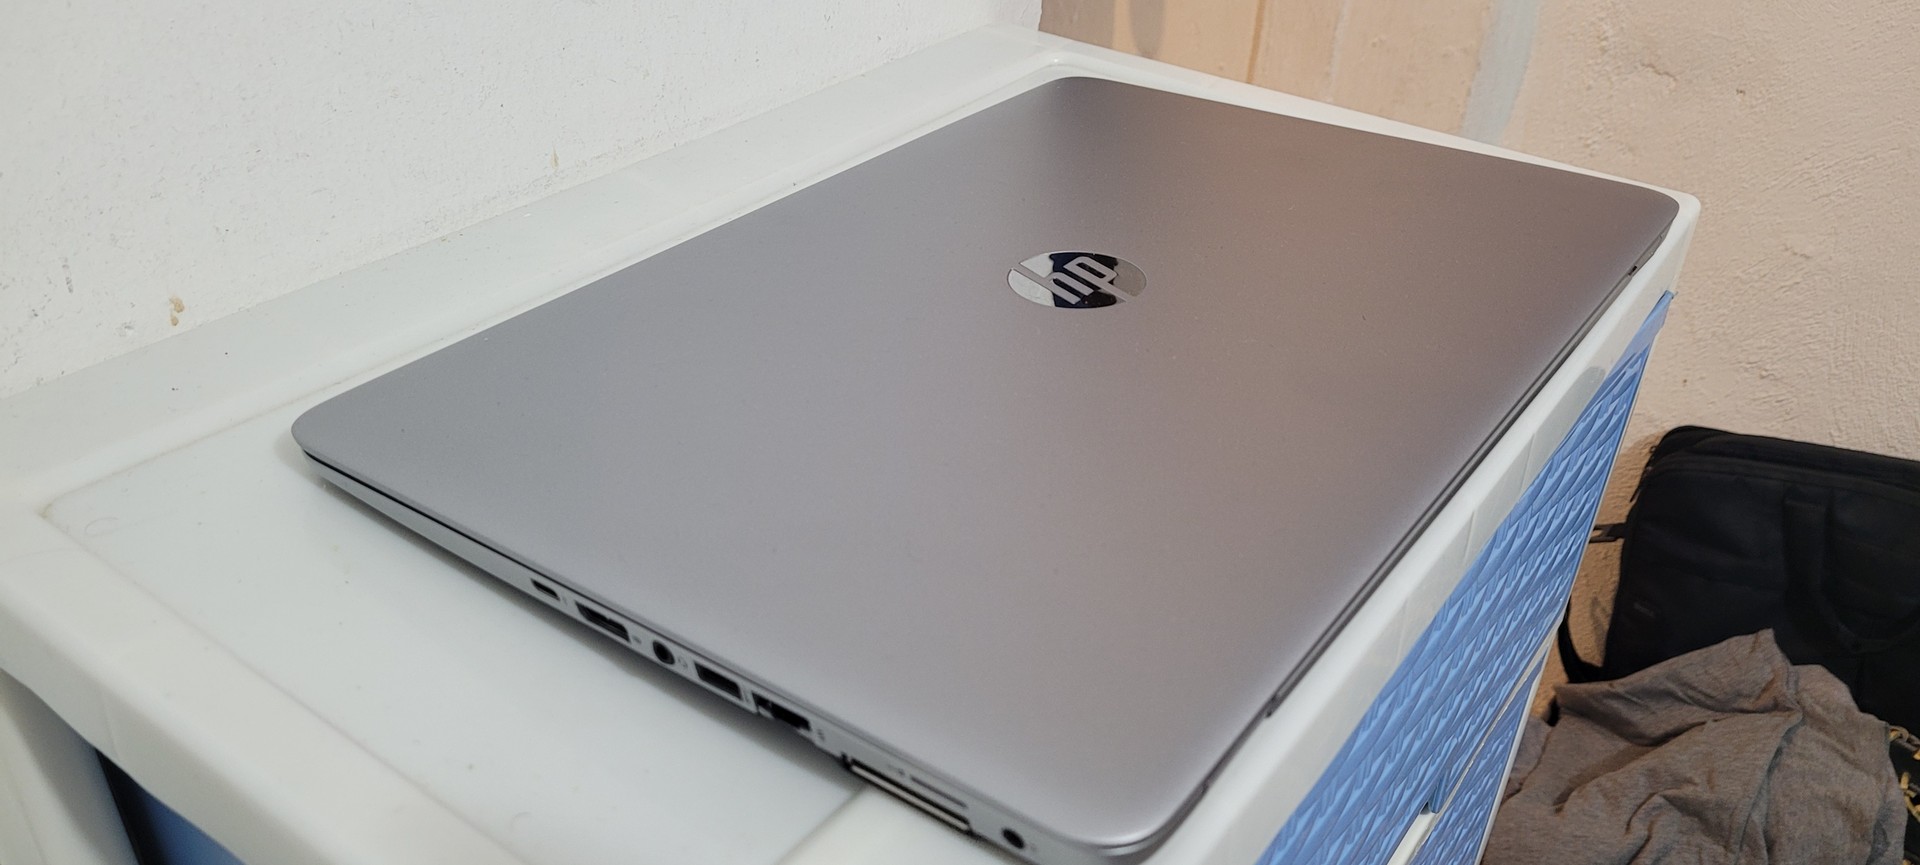 computadoras y laptops - Laptop hp Slim 14 Pulg Core i5 Ram 8gb Disco 500gb full 1080p 2